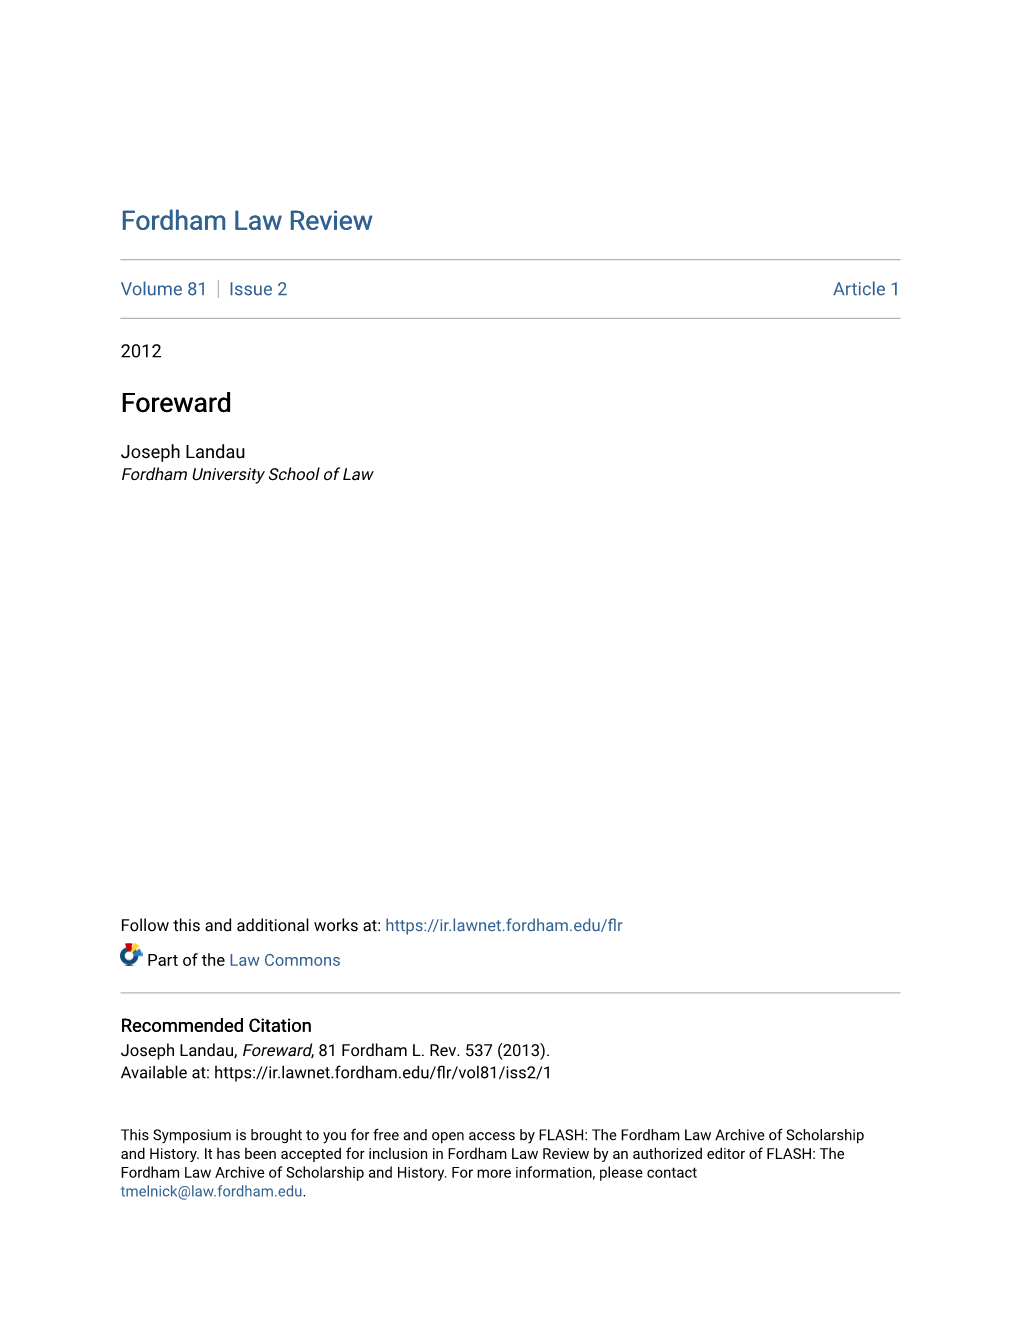 Fordham Law Review Foreward